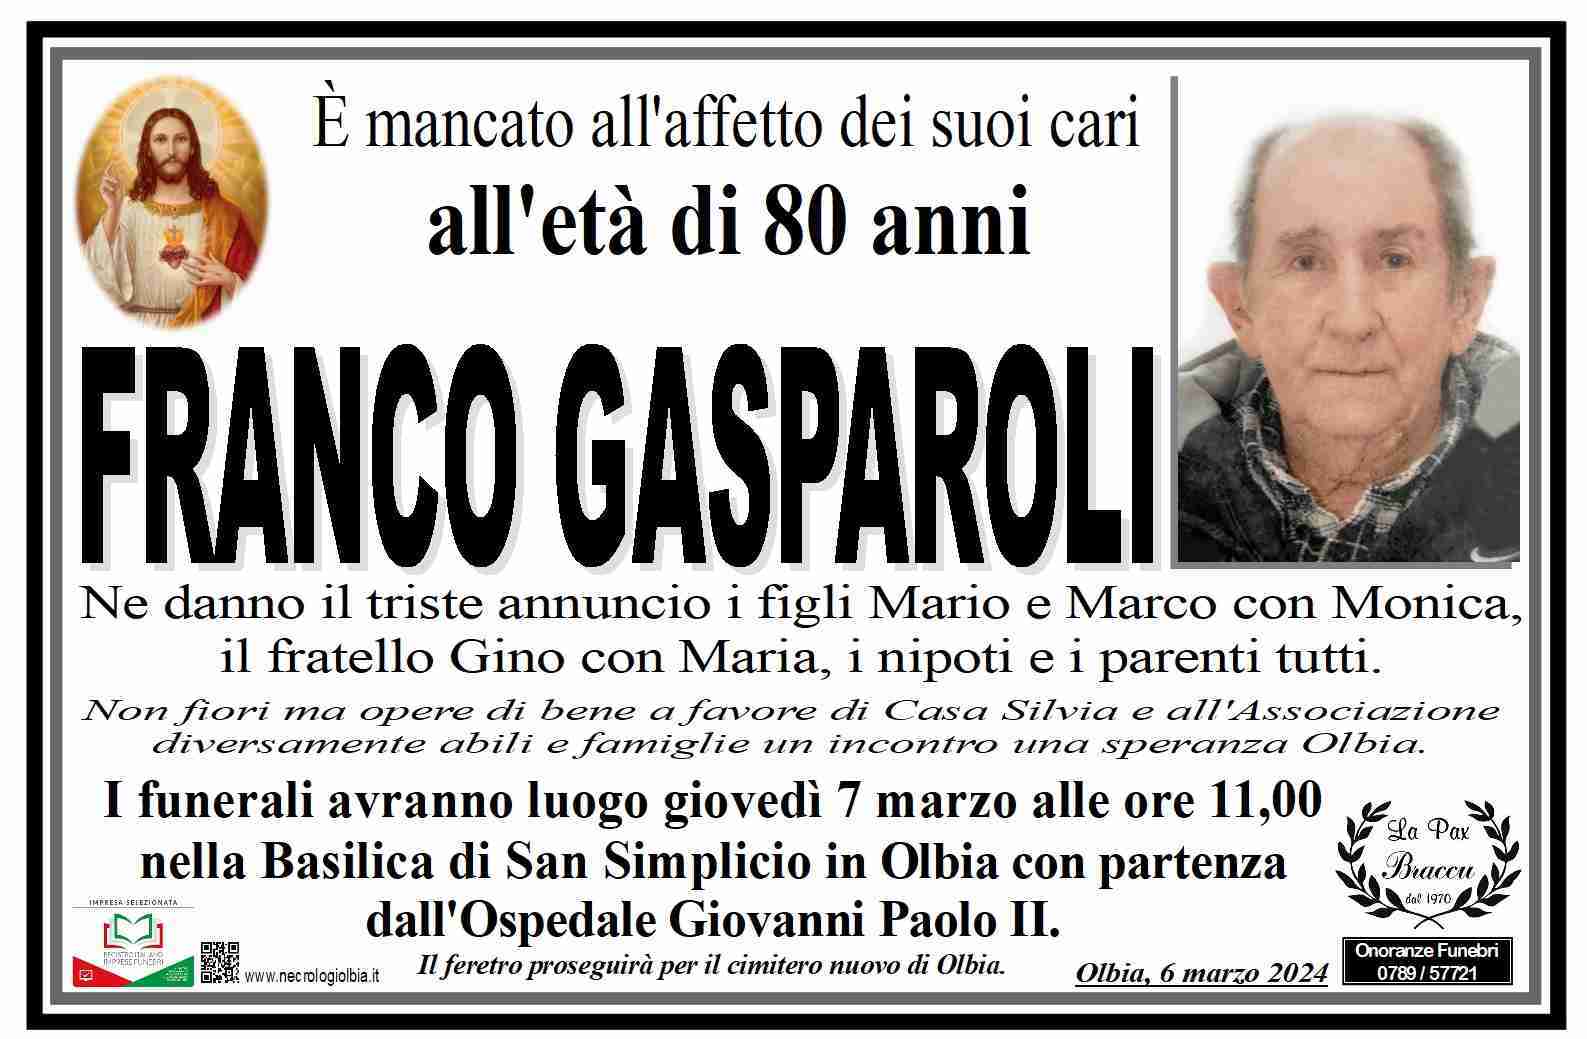 Franco Gasparoli